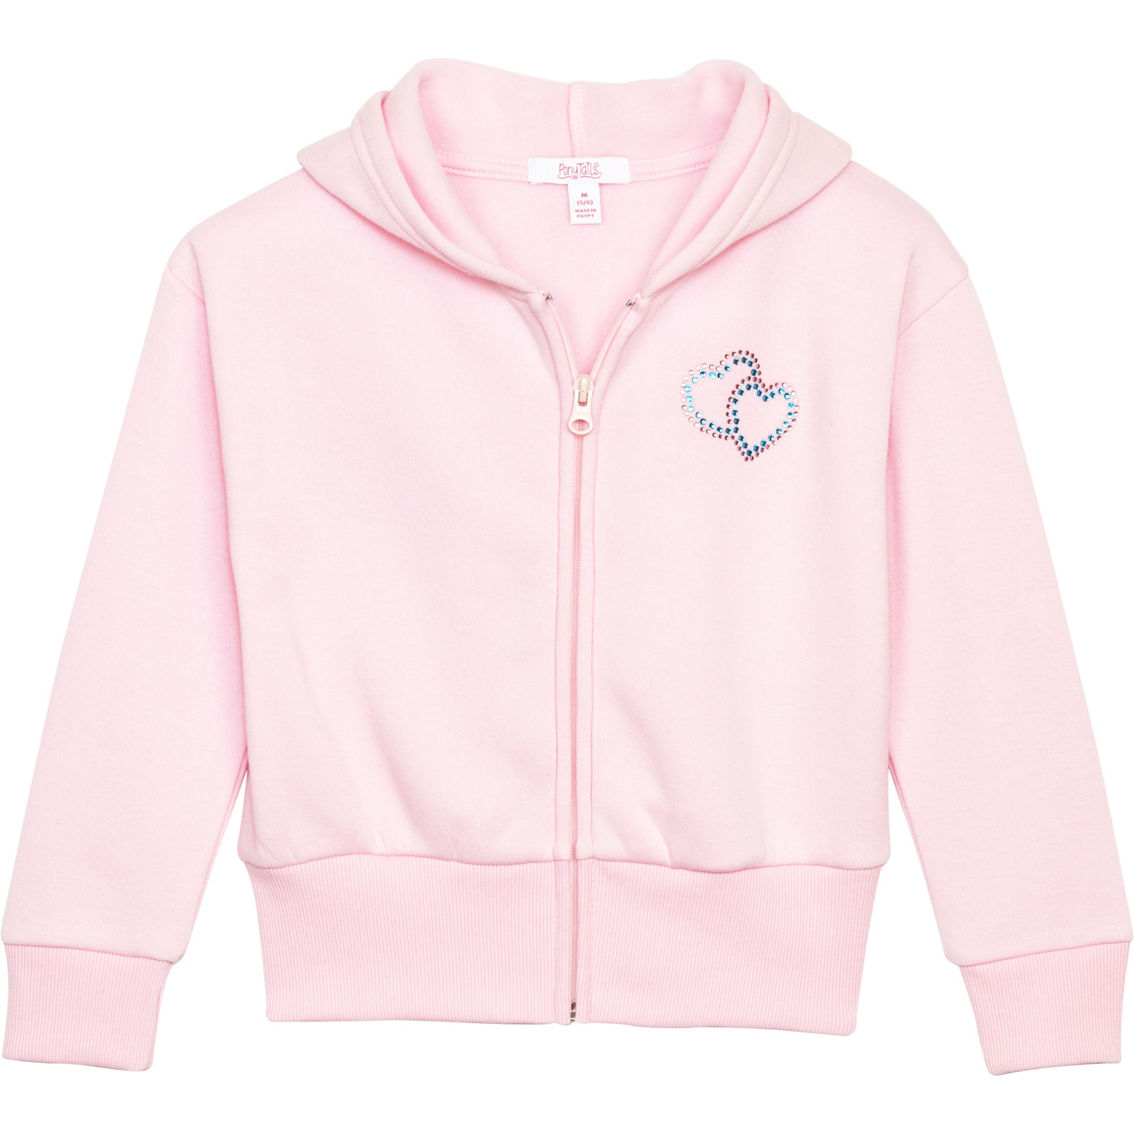 Gumballs Toddler Girls Pink Fleece Zip Hoodie | Toddler Girls 2t-5t ...